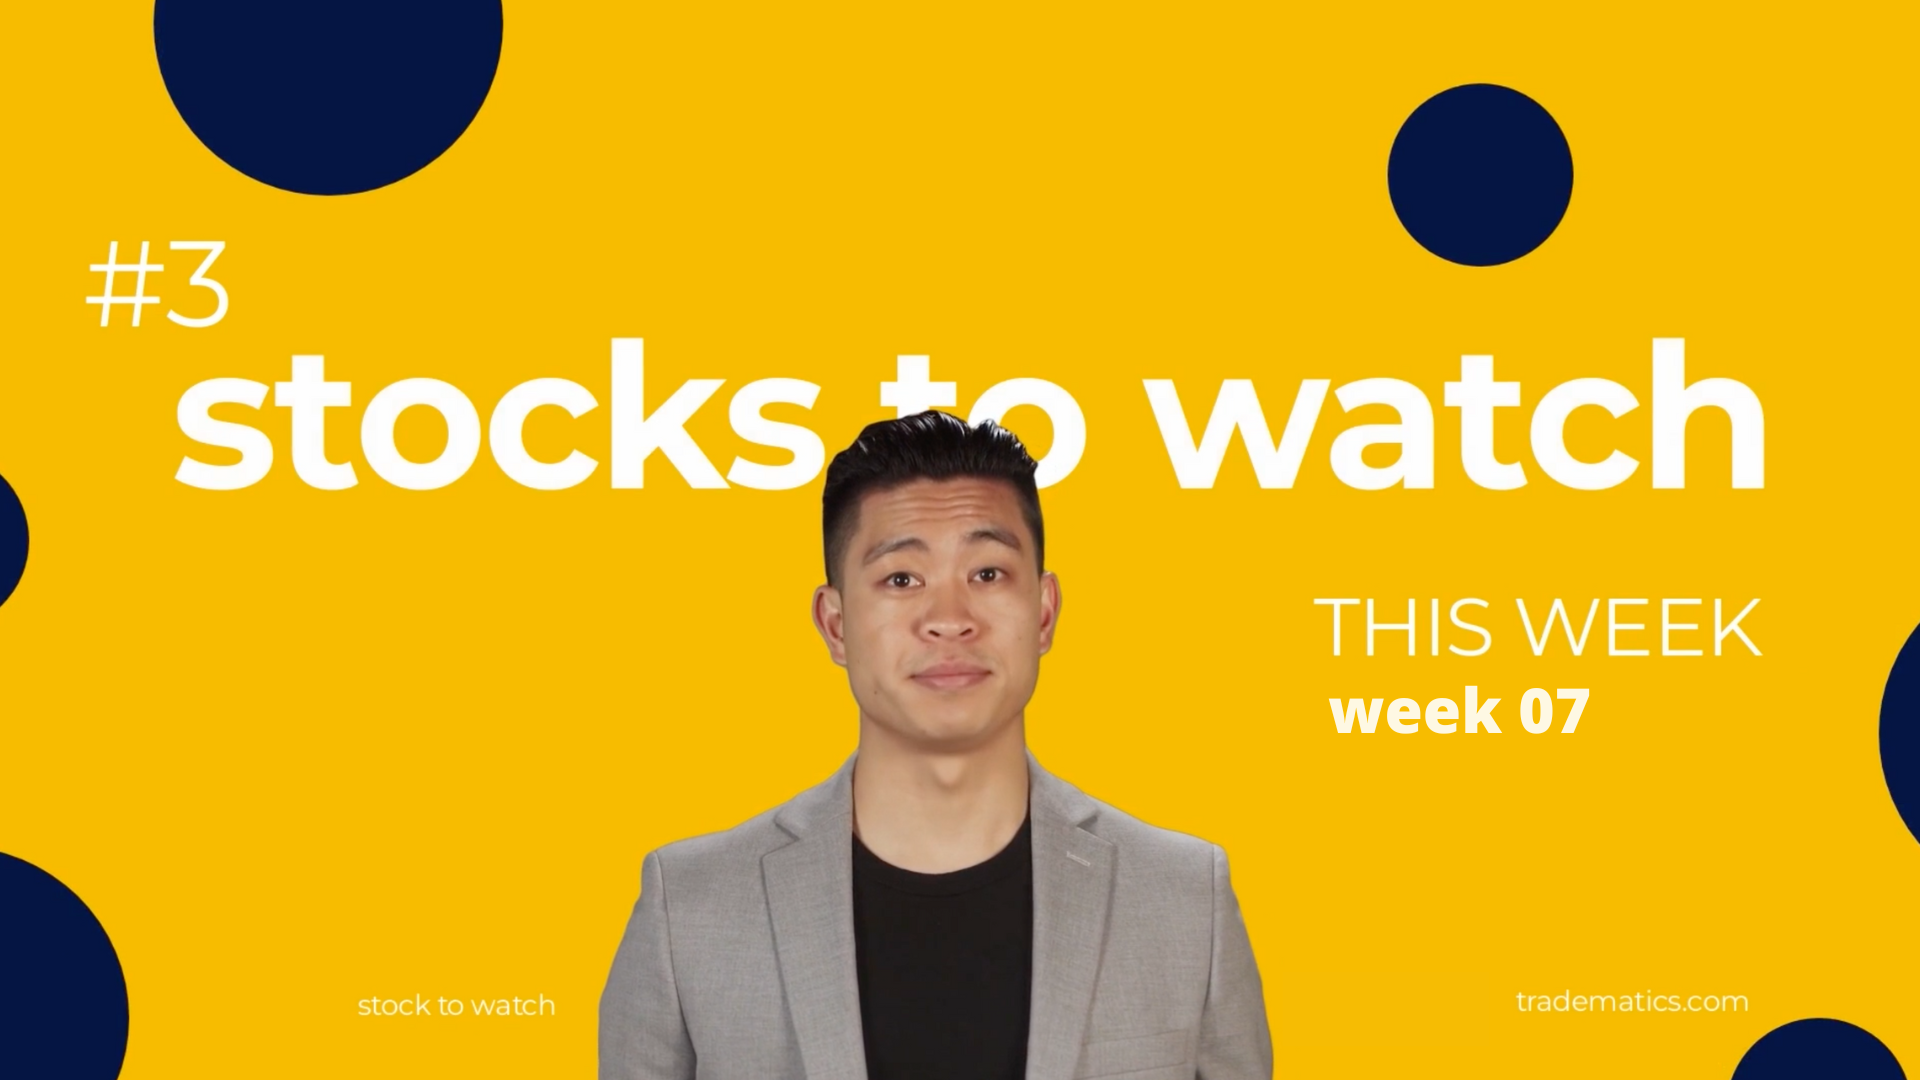 Tradematics | Stocks to Watch this week | week 07